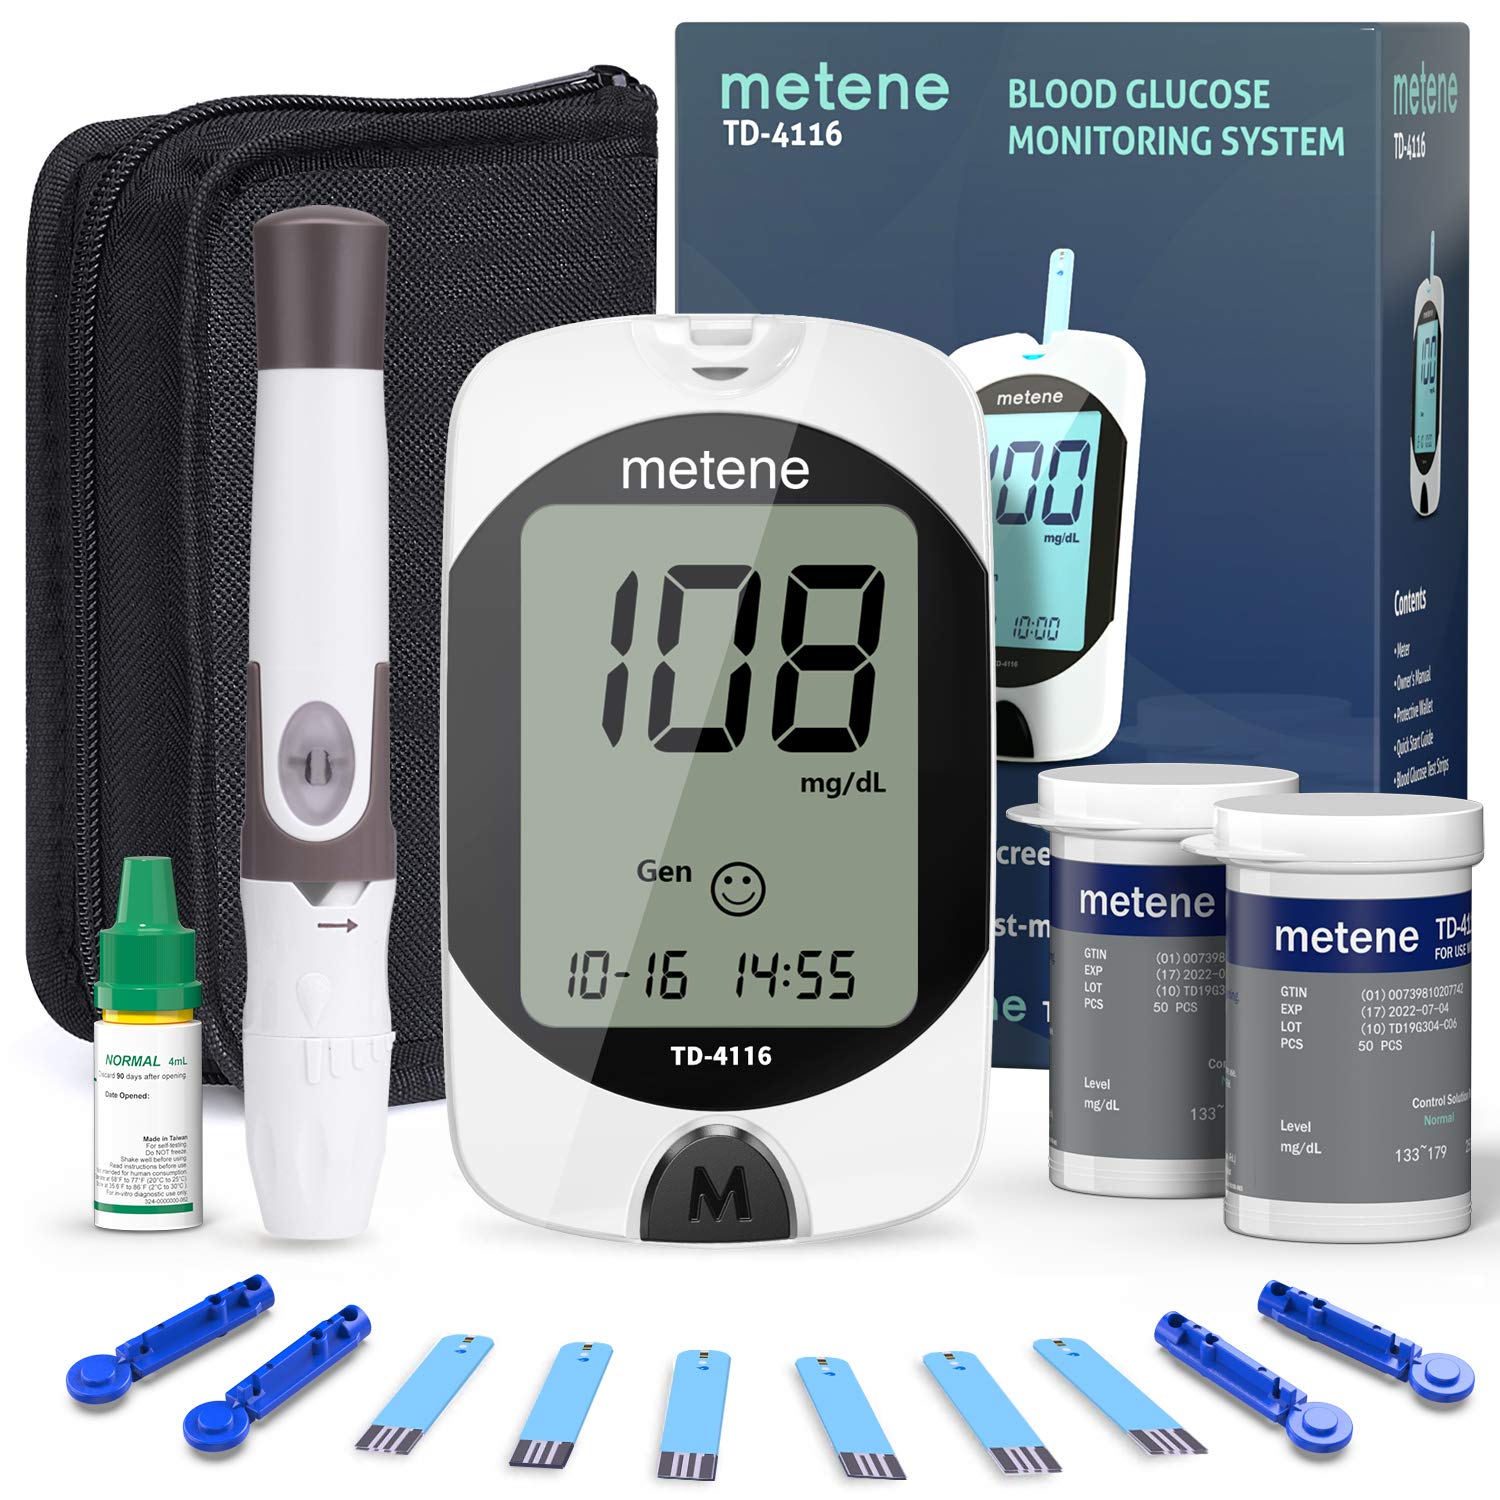 $9.99 - Metene TD-4116 Blood Glucose Monitor Kit with 100 Glucometer Strips, 100 Lancets